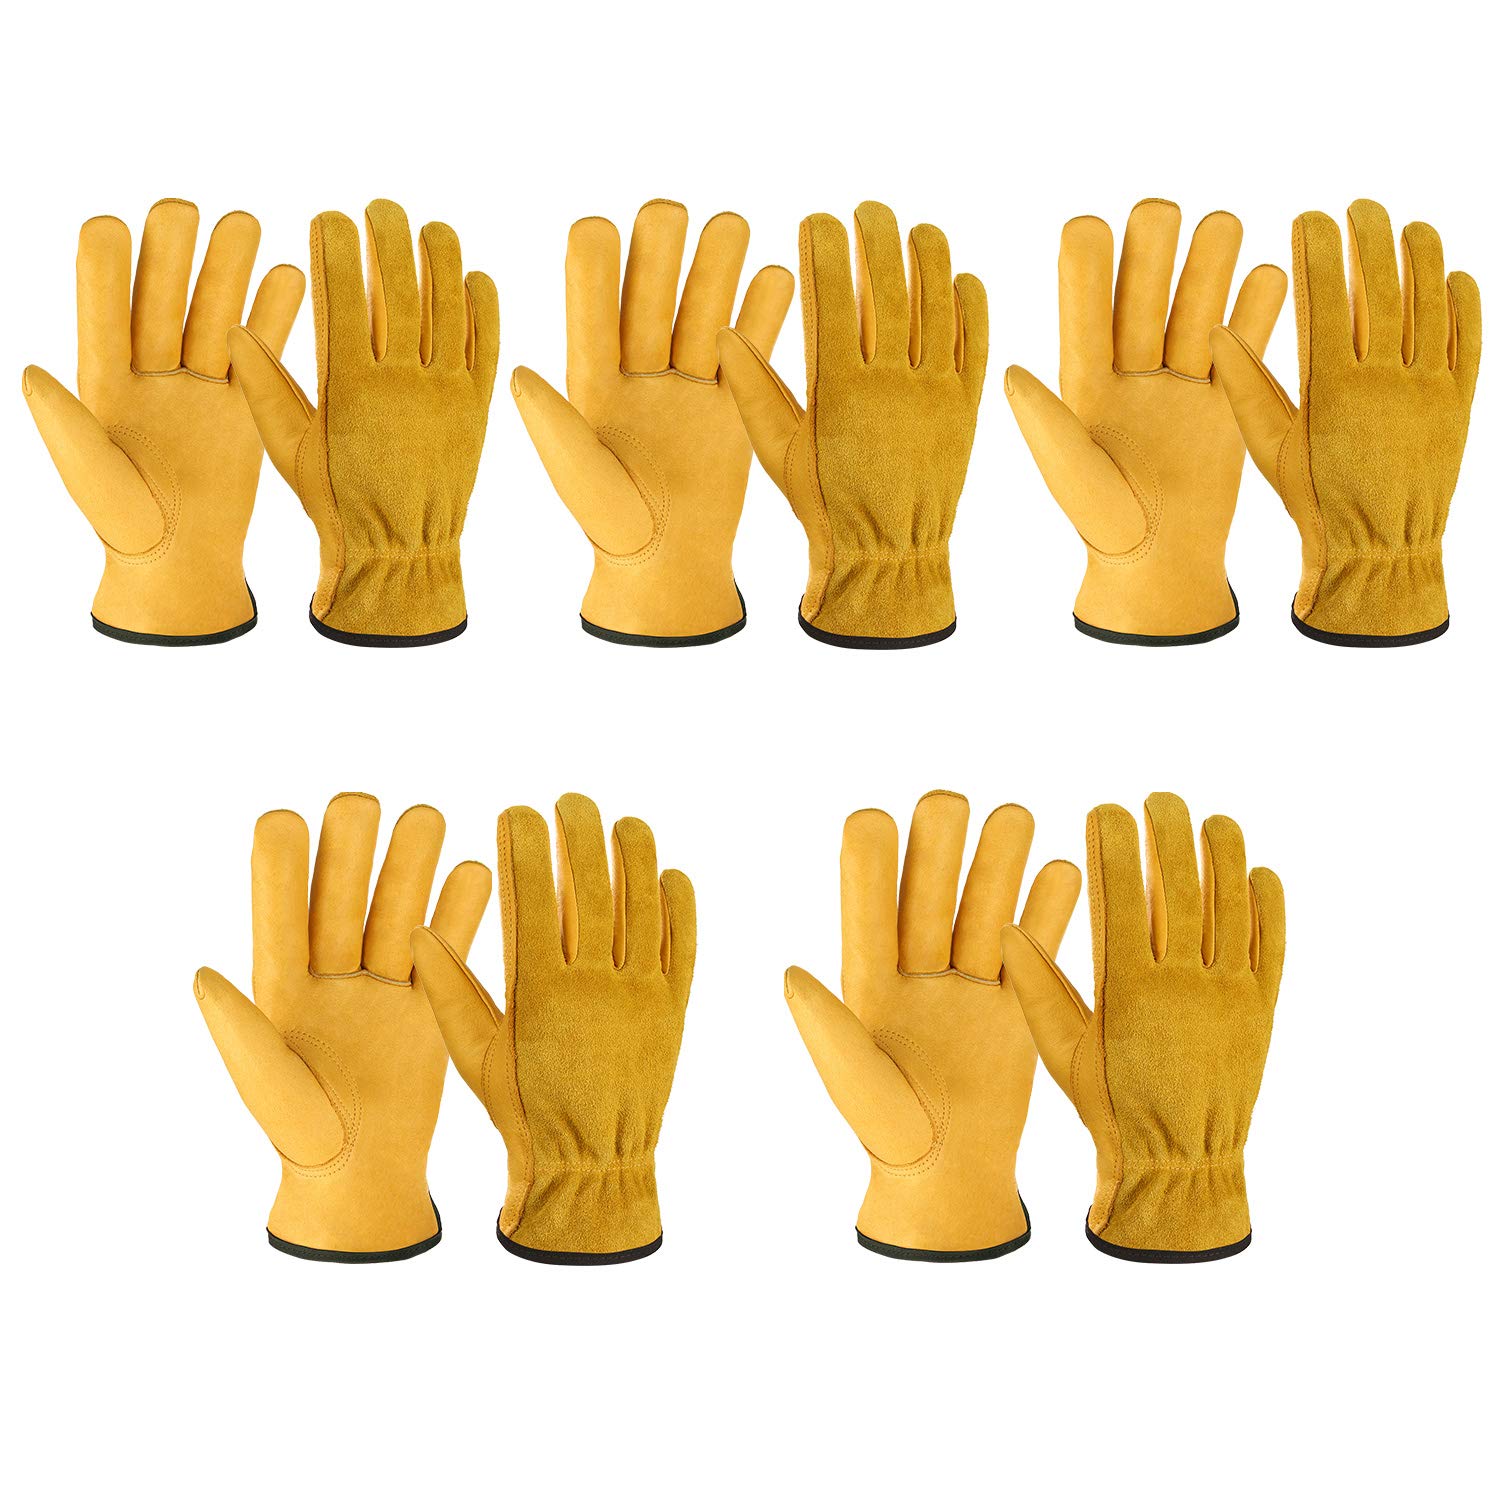 OZERO 5Pair Leather Work gloves cowhide garden glove for Wood cuttingYard gold,Large